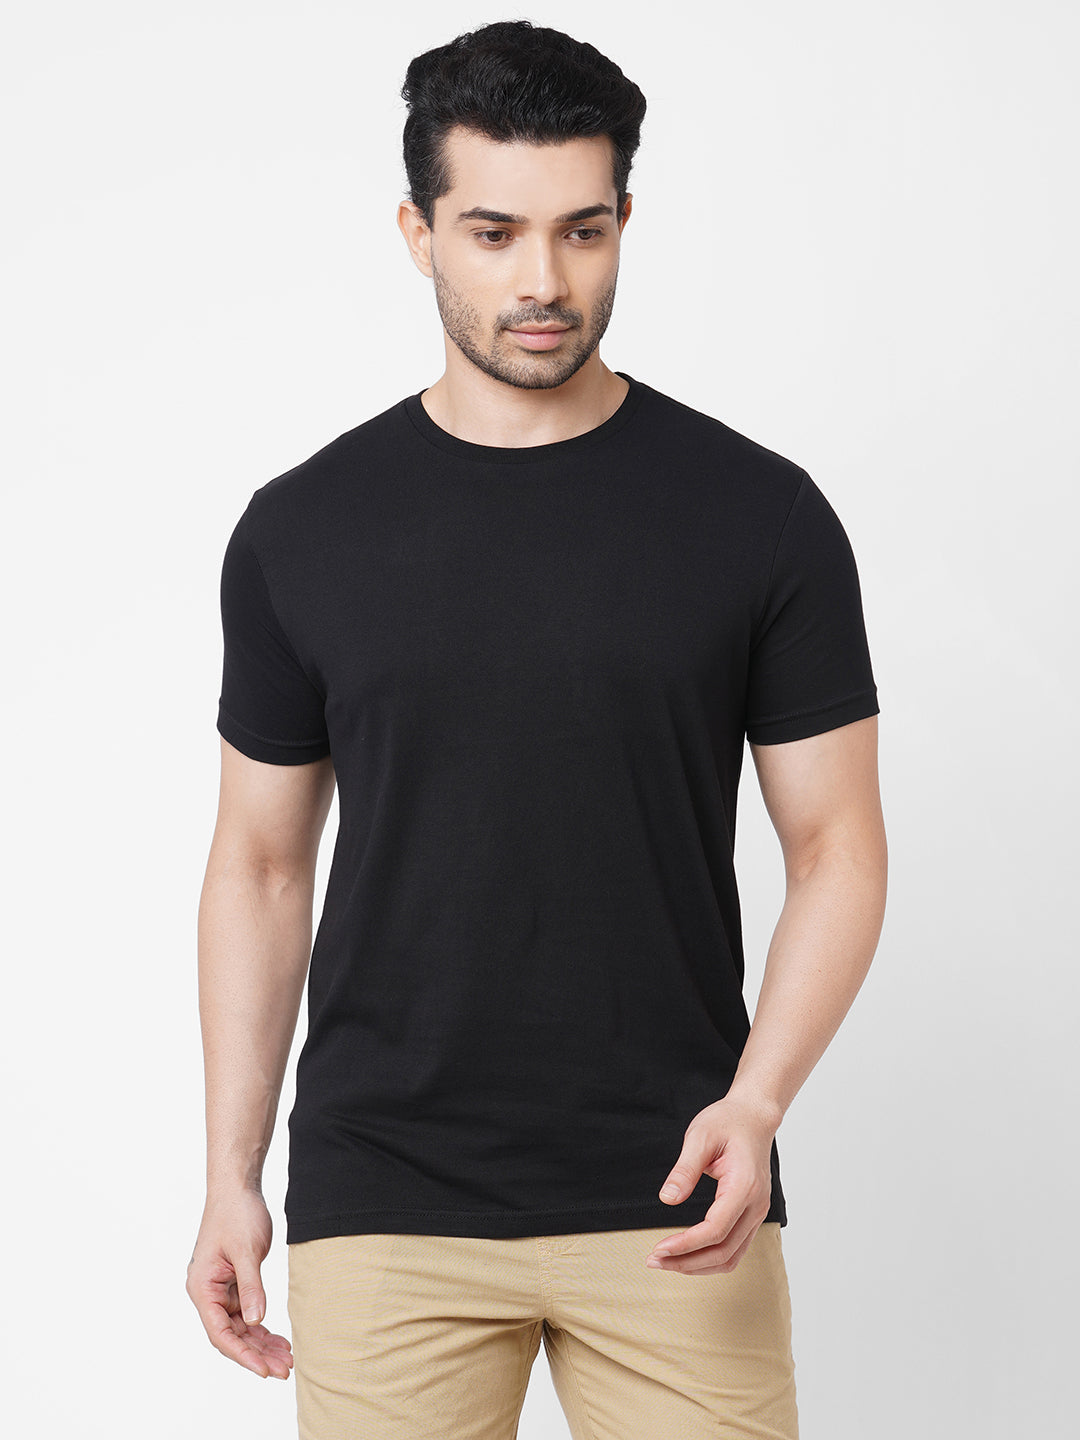 Men's Crew Neck Regular Fit T-Shirt 100% Cotton Black